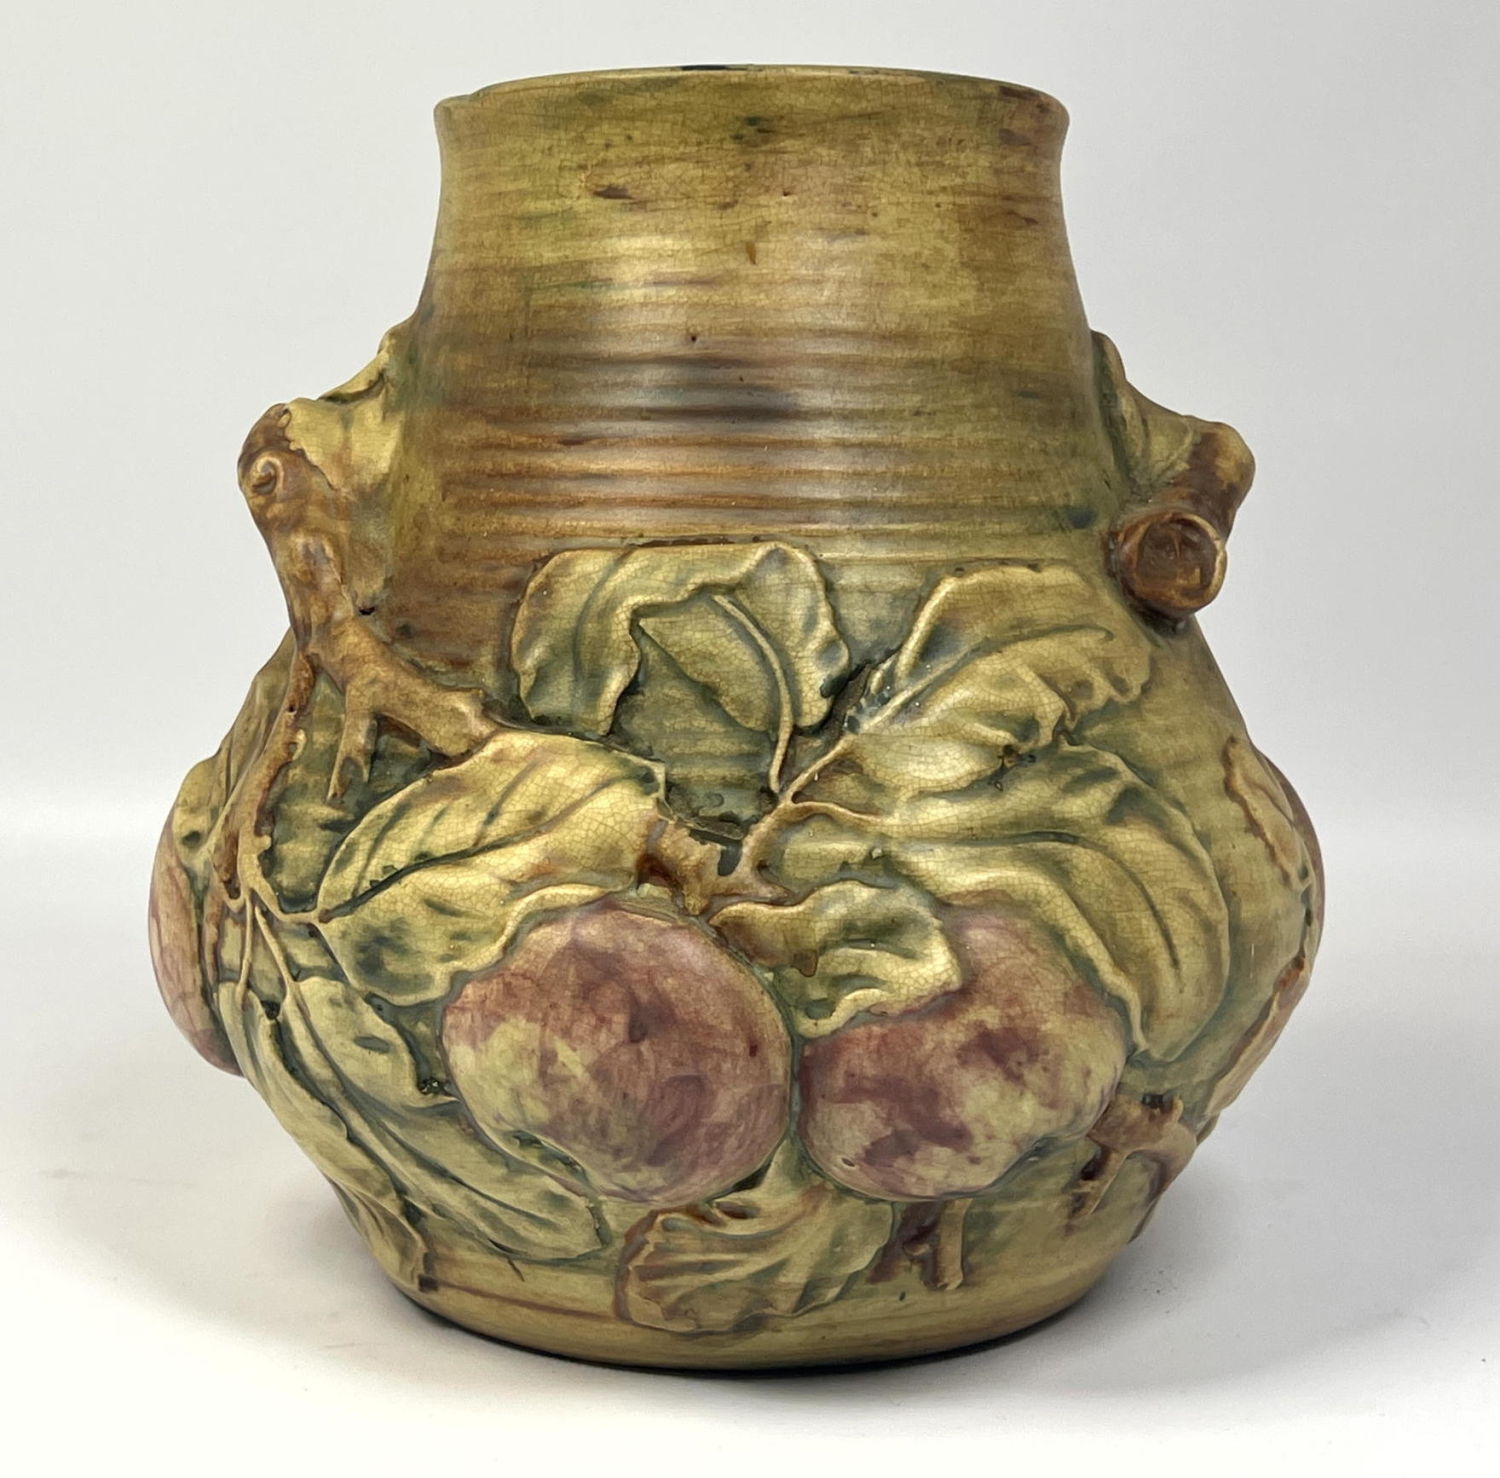 Weller Art pottery vase 

Dimensions: